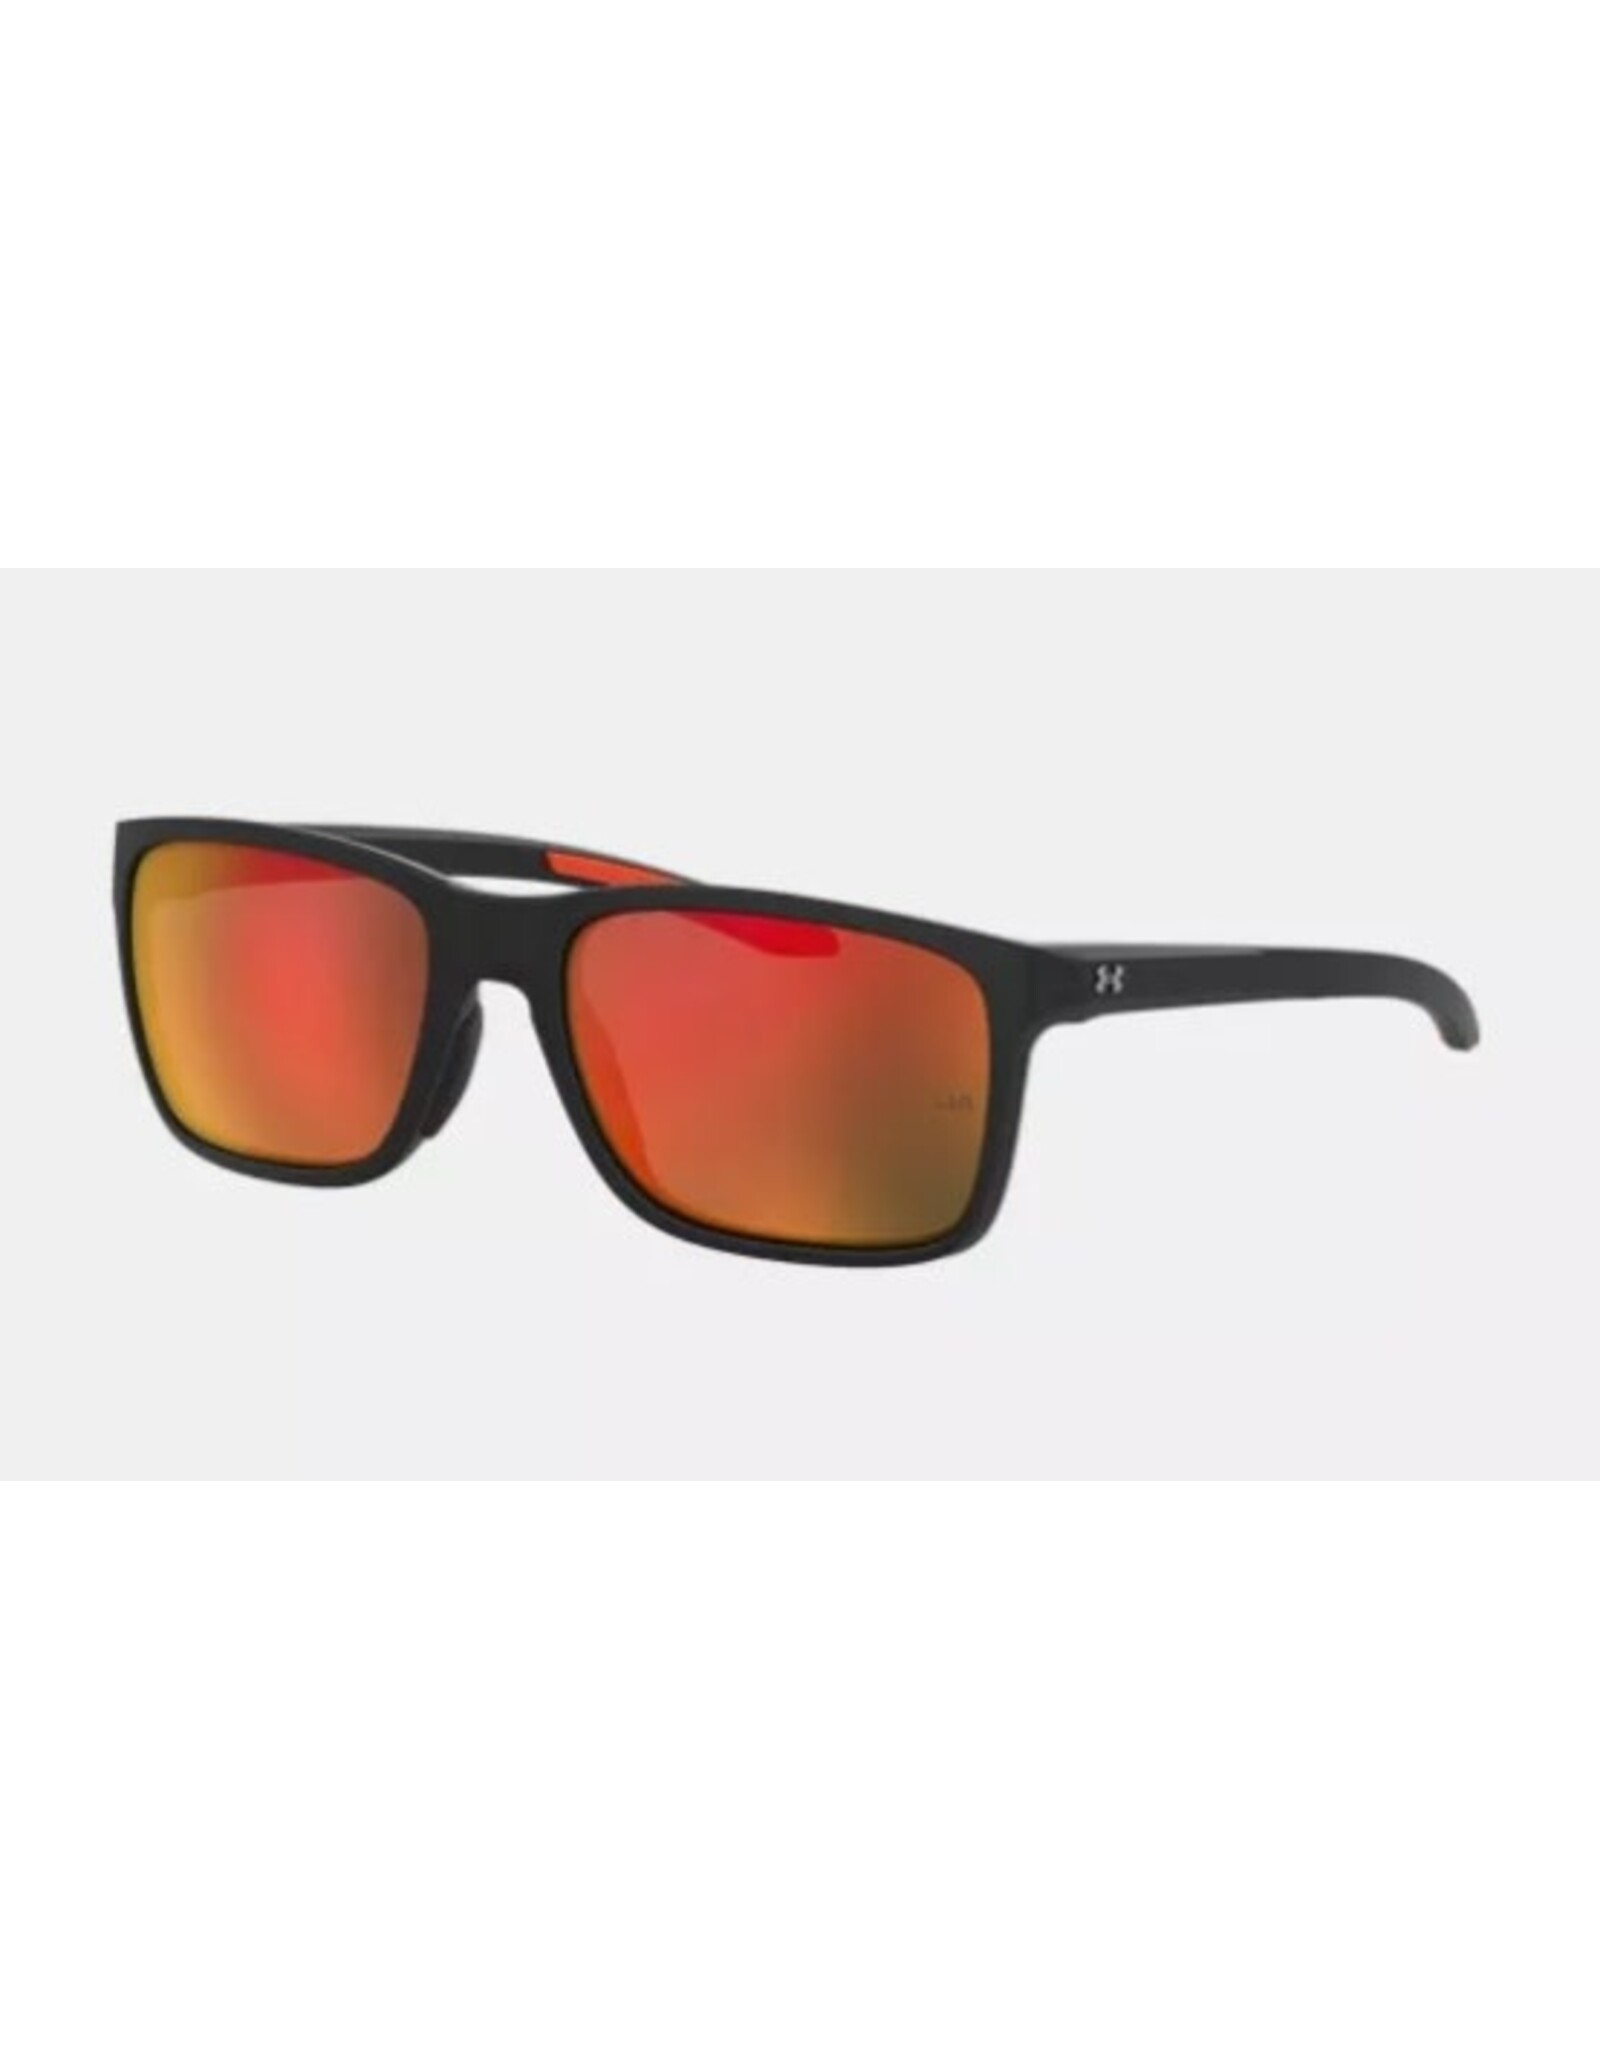 Under Armour Unisex UA Hustle Mirror Sunglasses Matte Black/Gray/Infrared